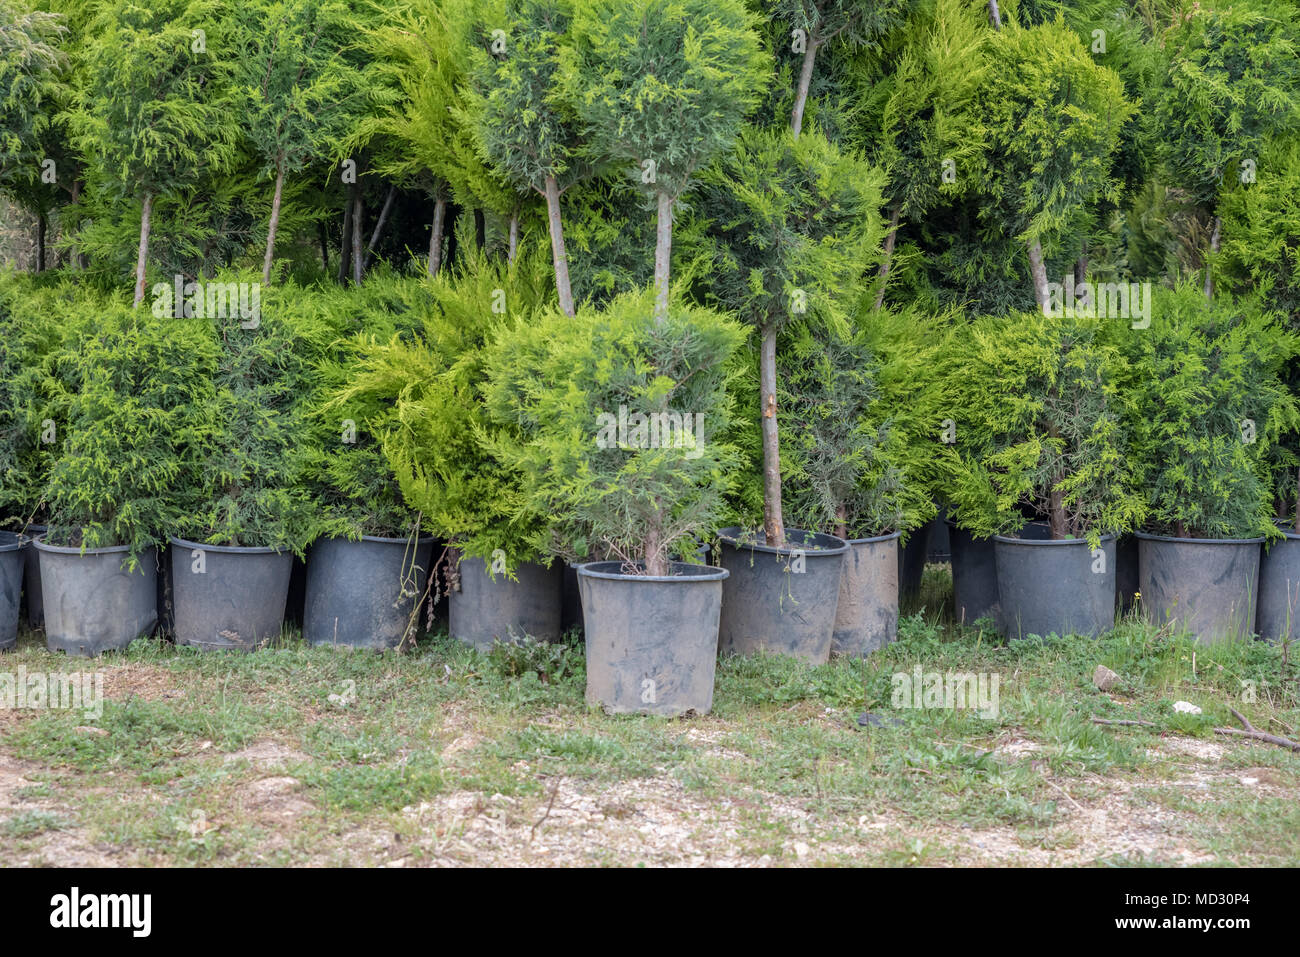 Many Green Golden Leyland Hedge trees (Cupressocyparis leylandii Castlewellan Gold) in plastic box for sale Stock Photo